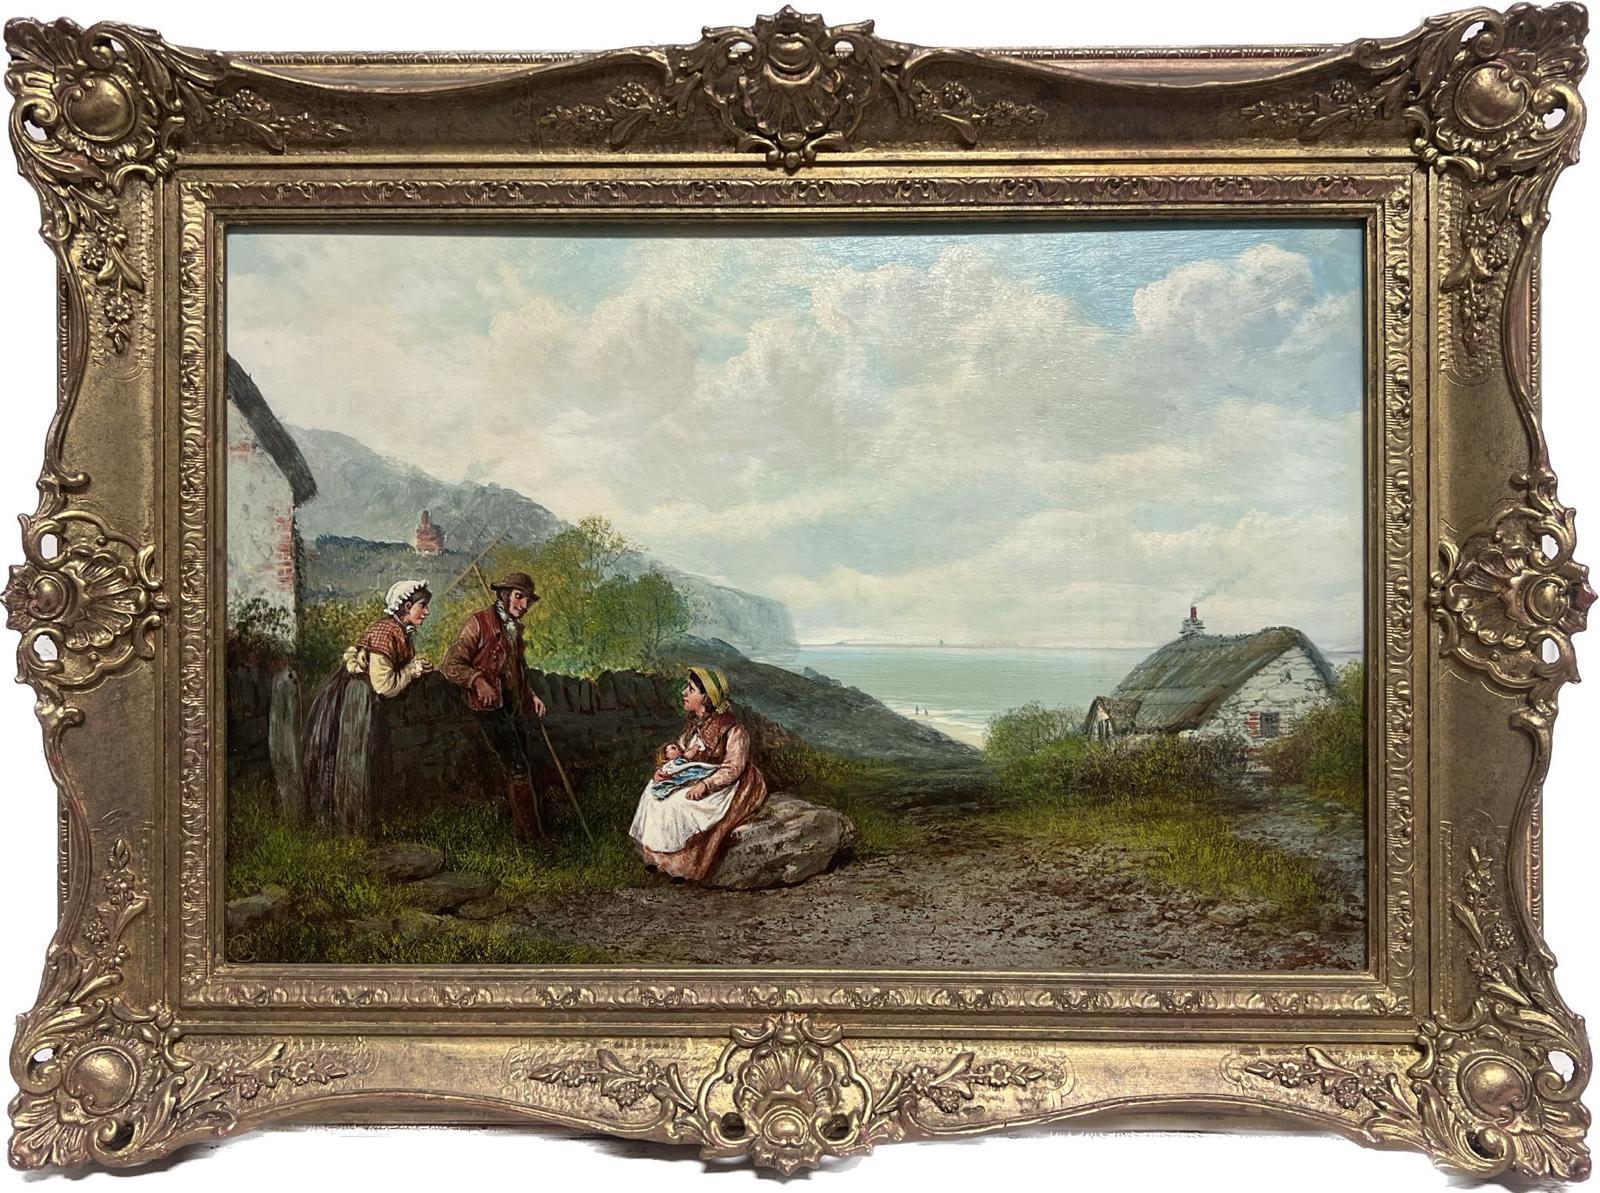 Victorian English Landscape Painting - 19th Century English Oil Painting Fisherfolk Cornish/ Devon Coastline Cottage